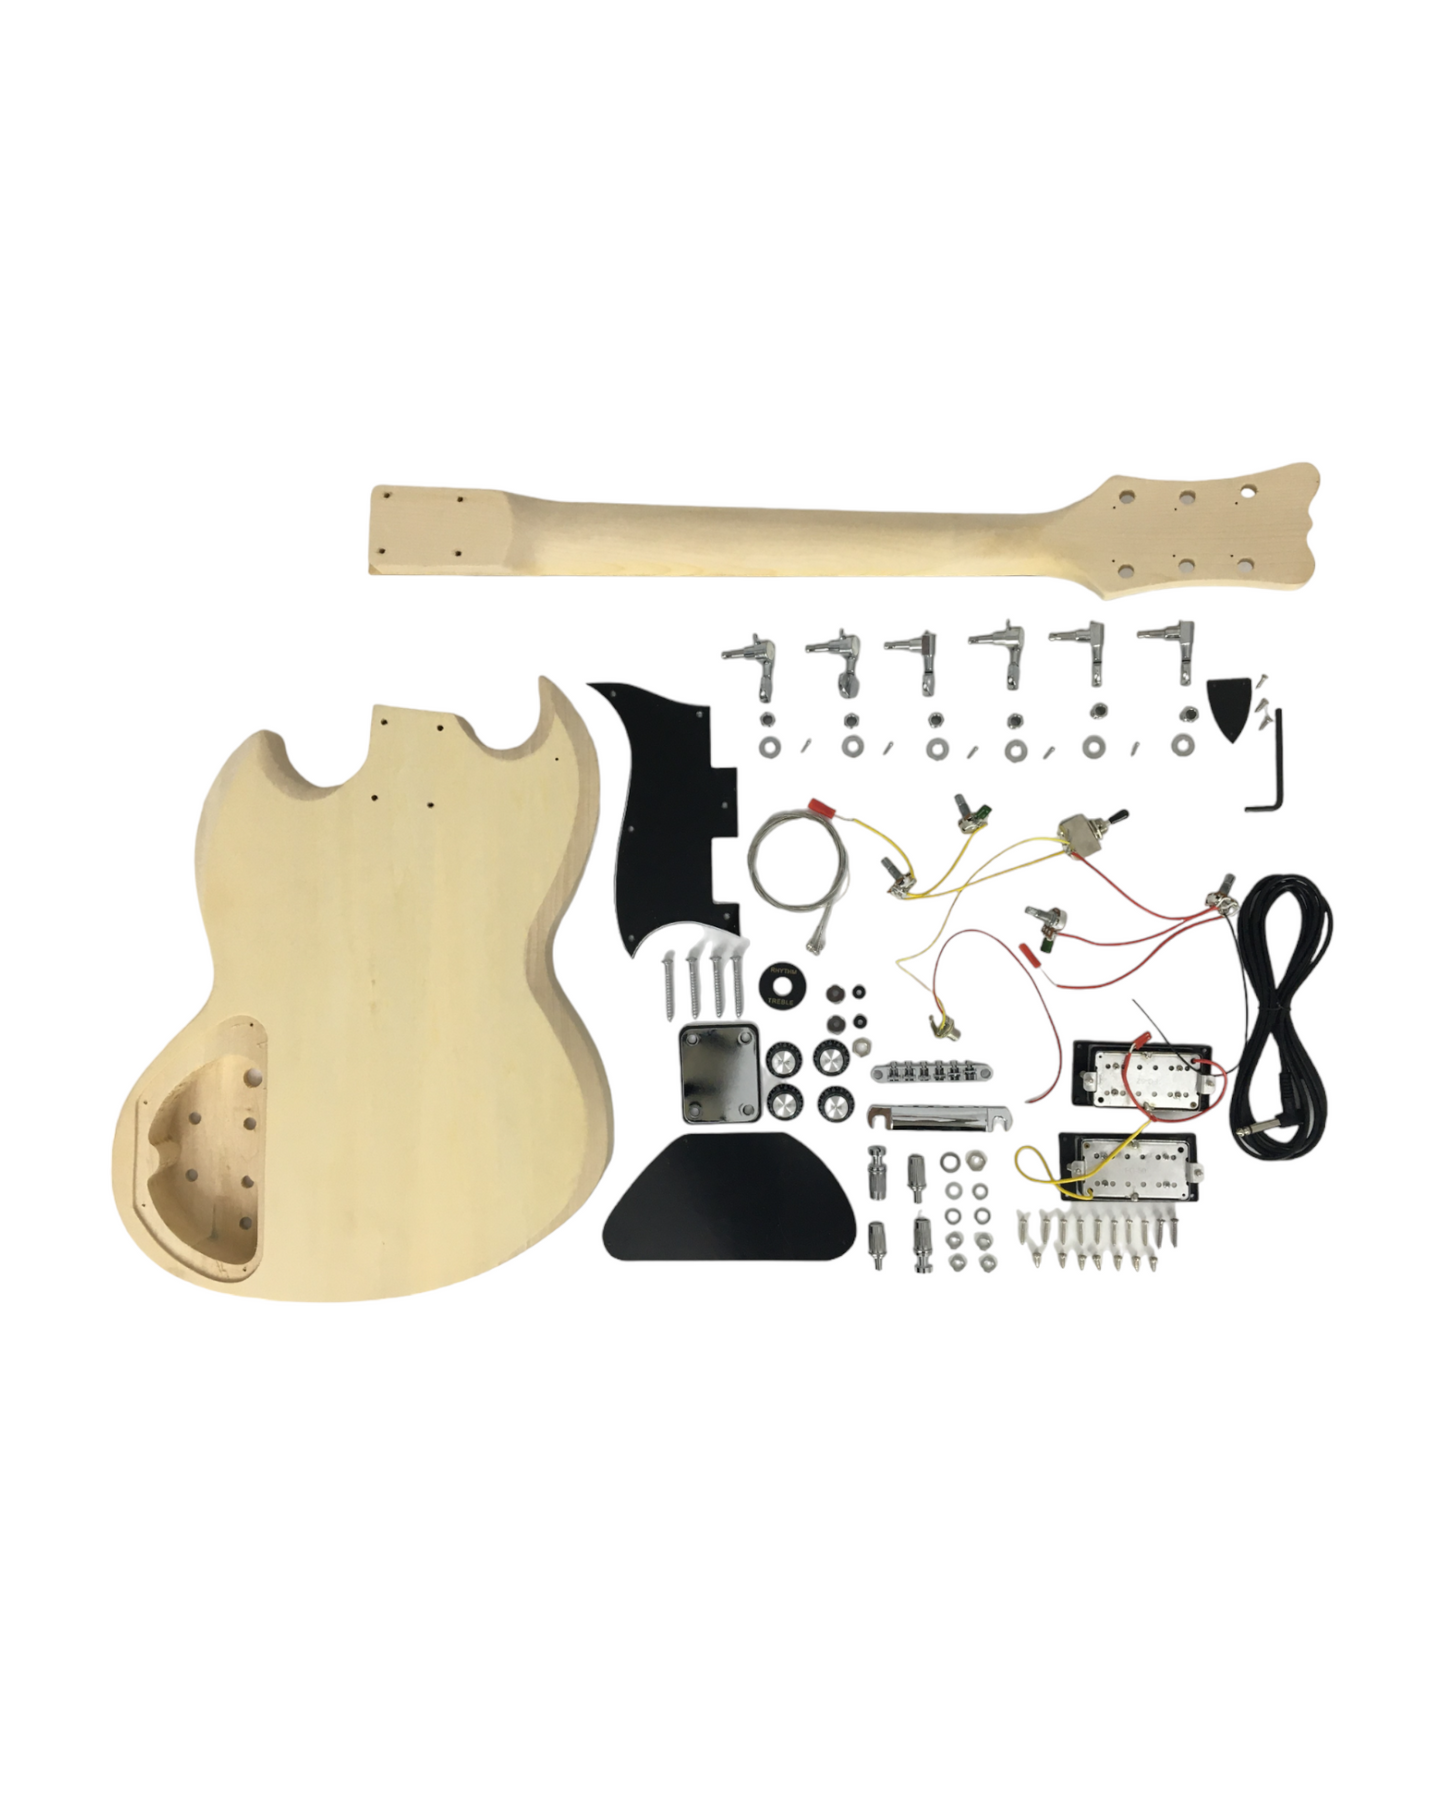 HSSG19205DIY Electric Guitar DIY Kit, Solid Basswood Body+Neck, No-Soldering, H-H